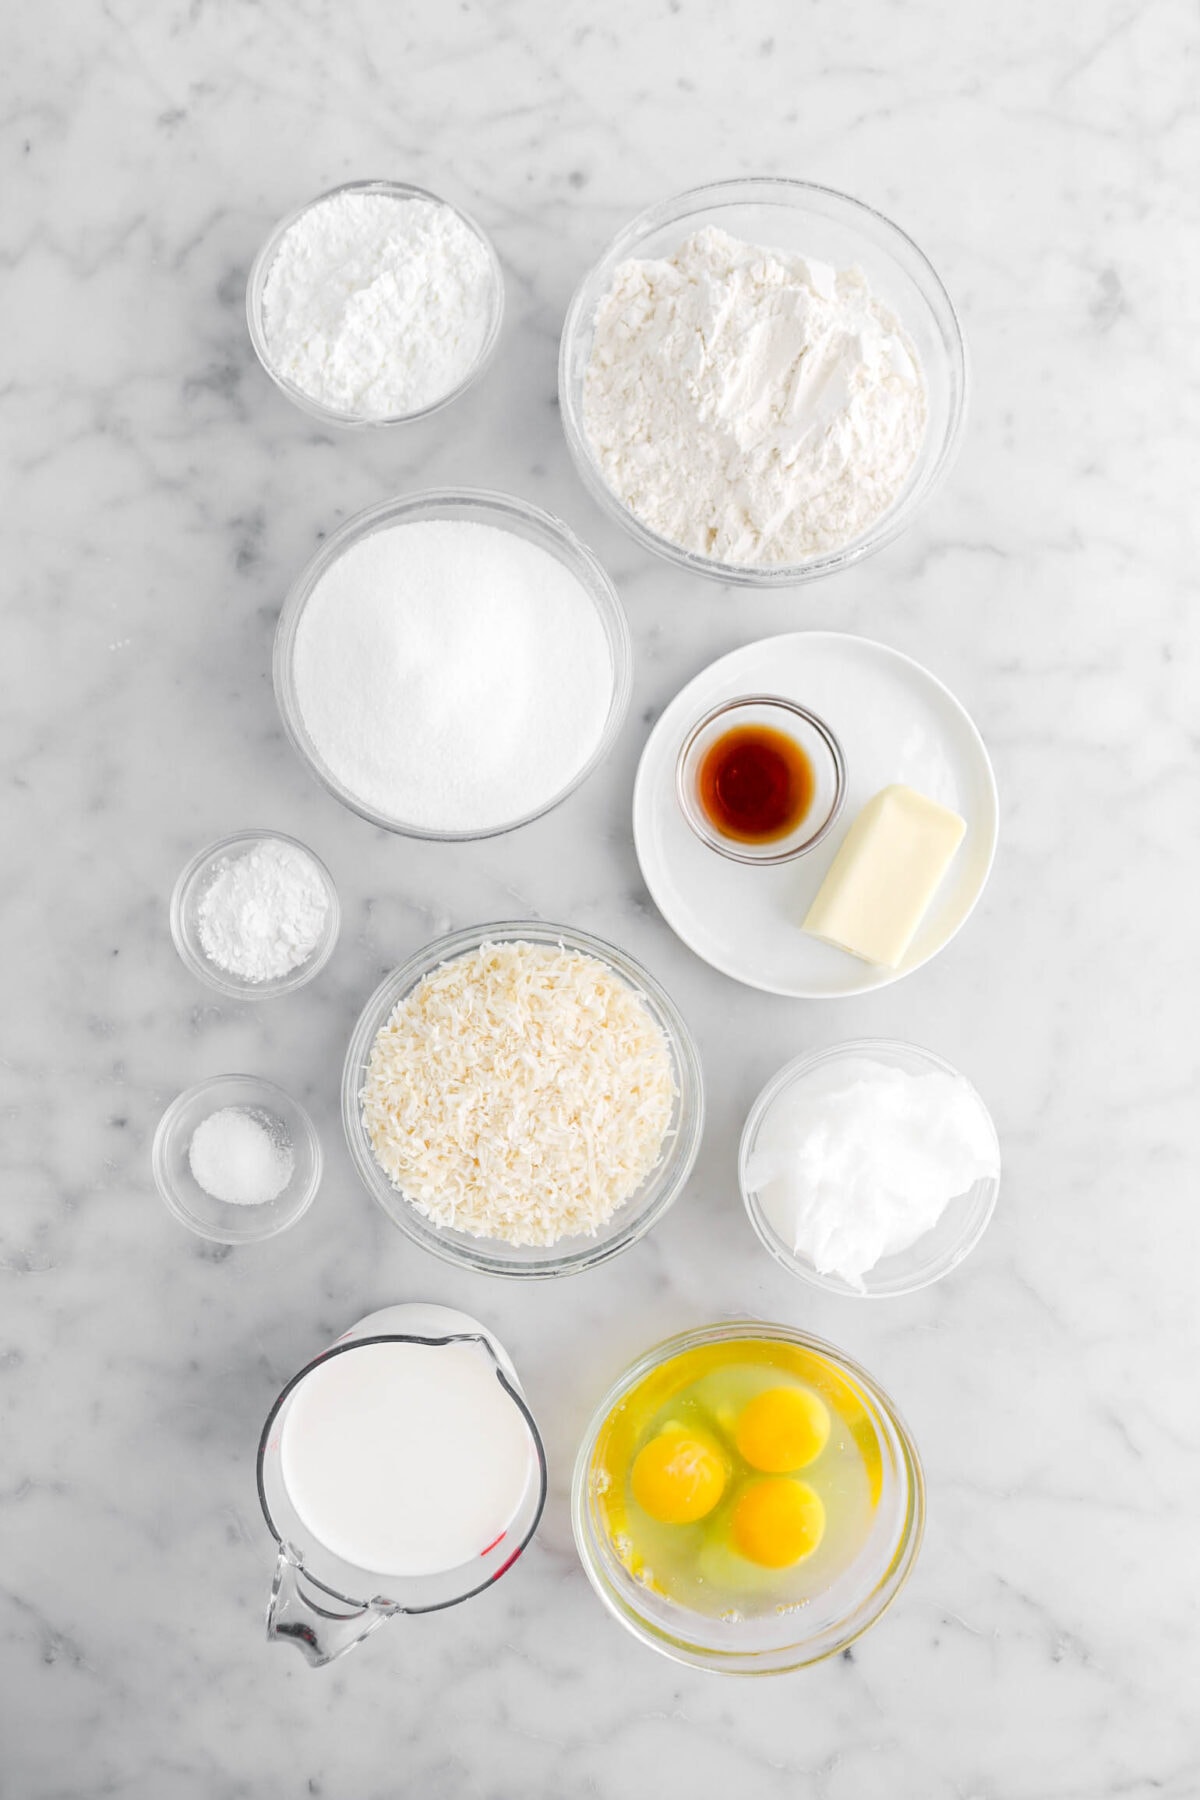 corn starch, flour, sugar, vanilla, butter, baking powder, salt, shredded coconut, coconut oil, milk, and eggs on marble surface.